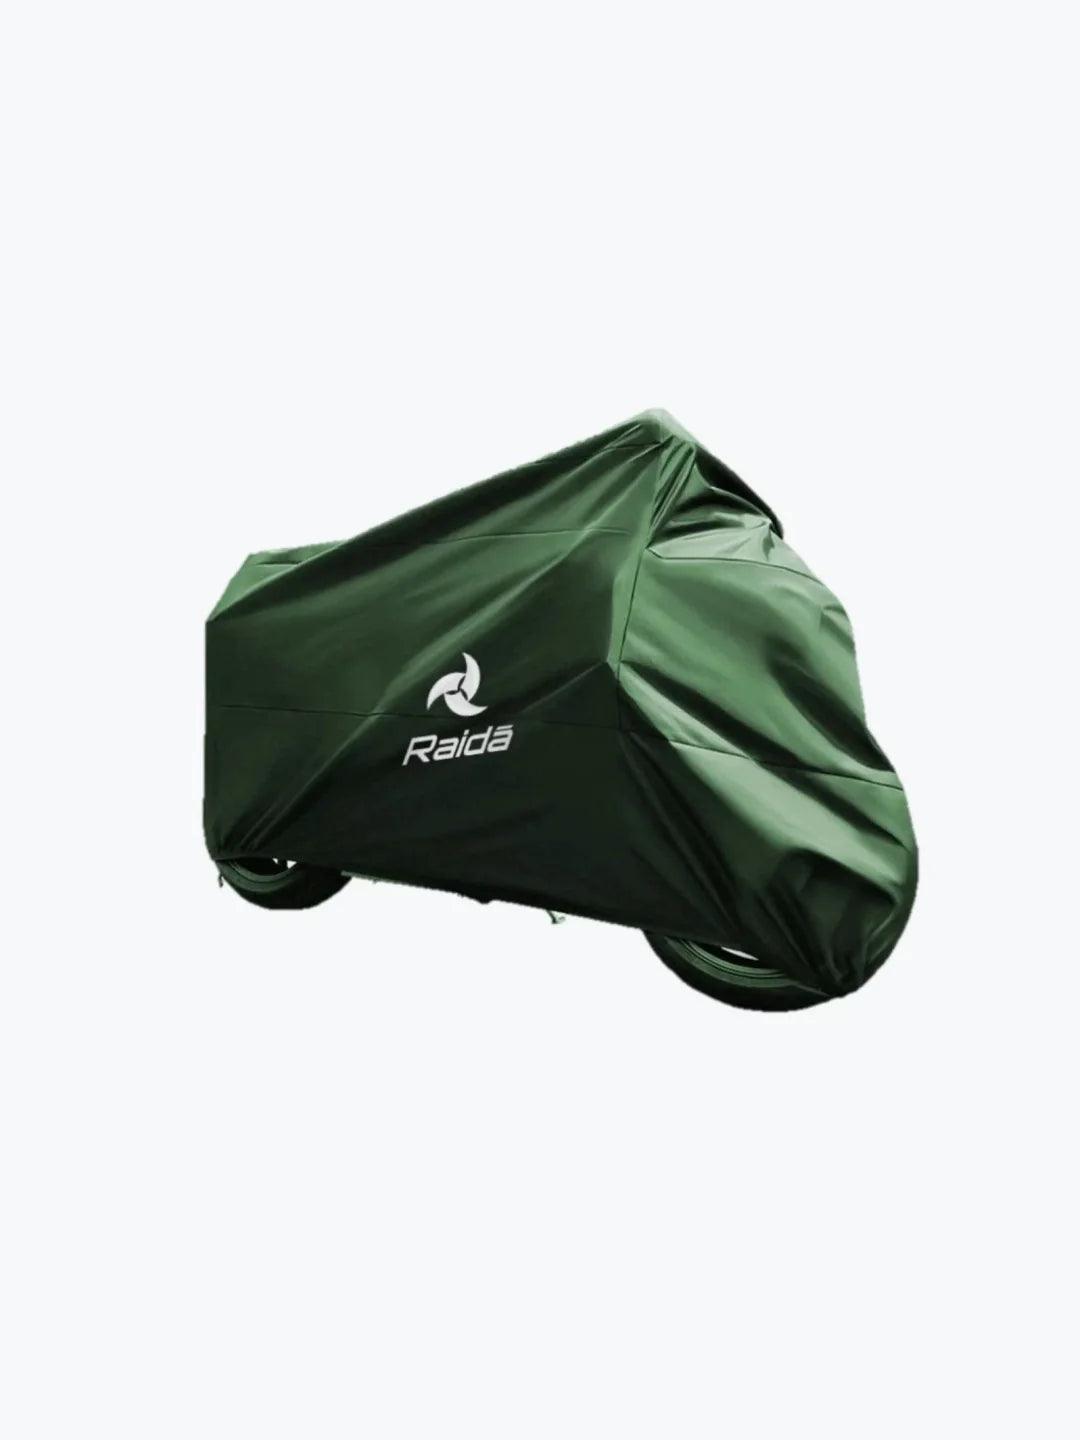 Raida Body Cover Green - Moto Modz